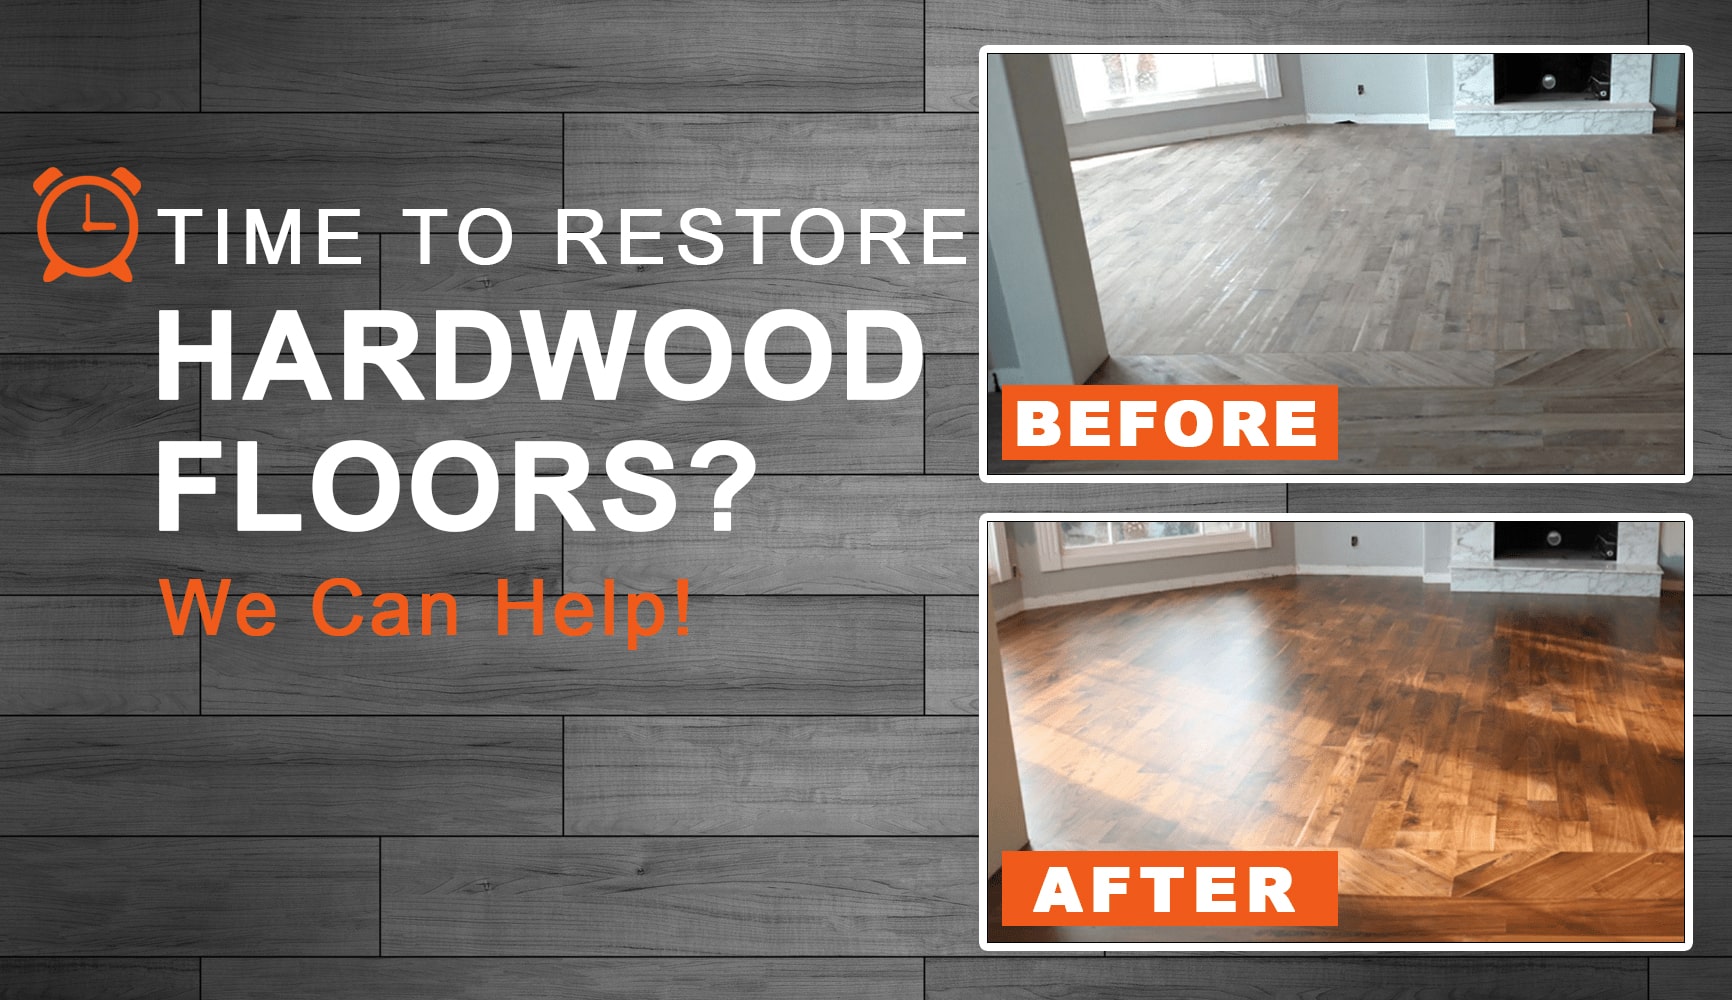 Time to restore hardwood floors